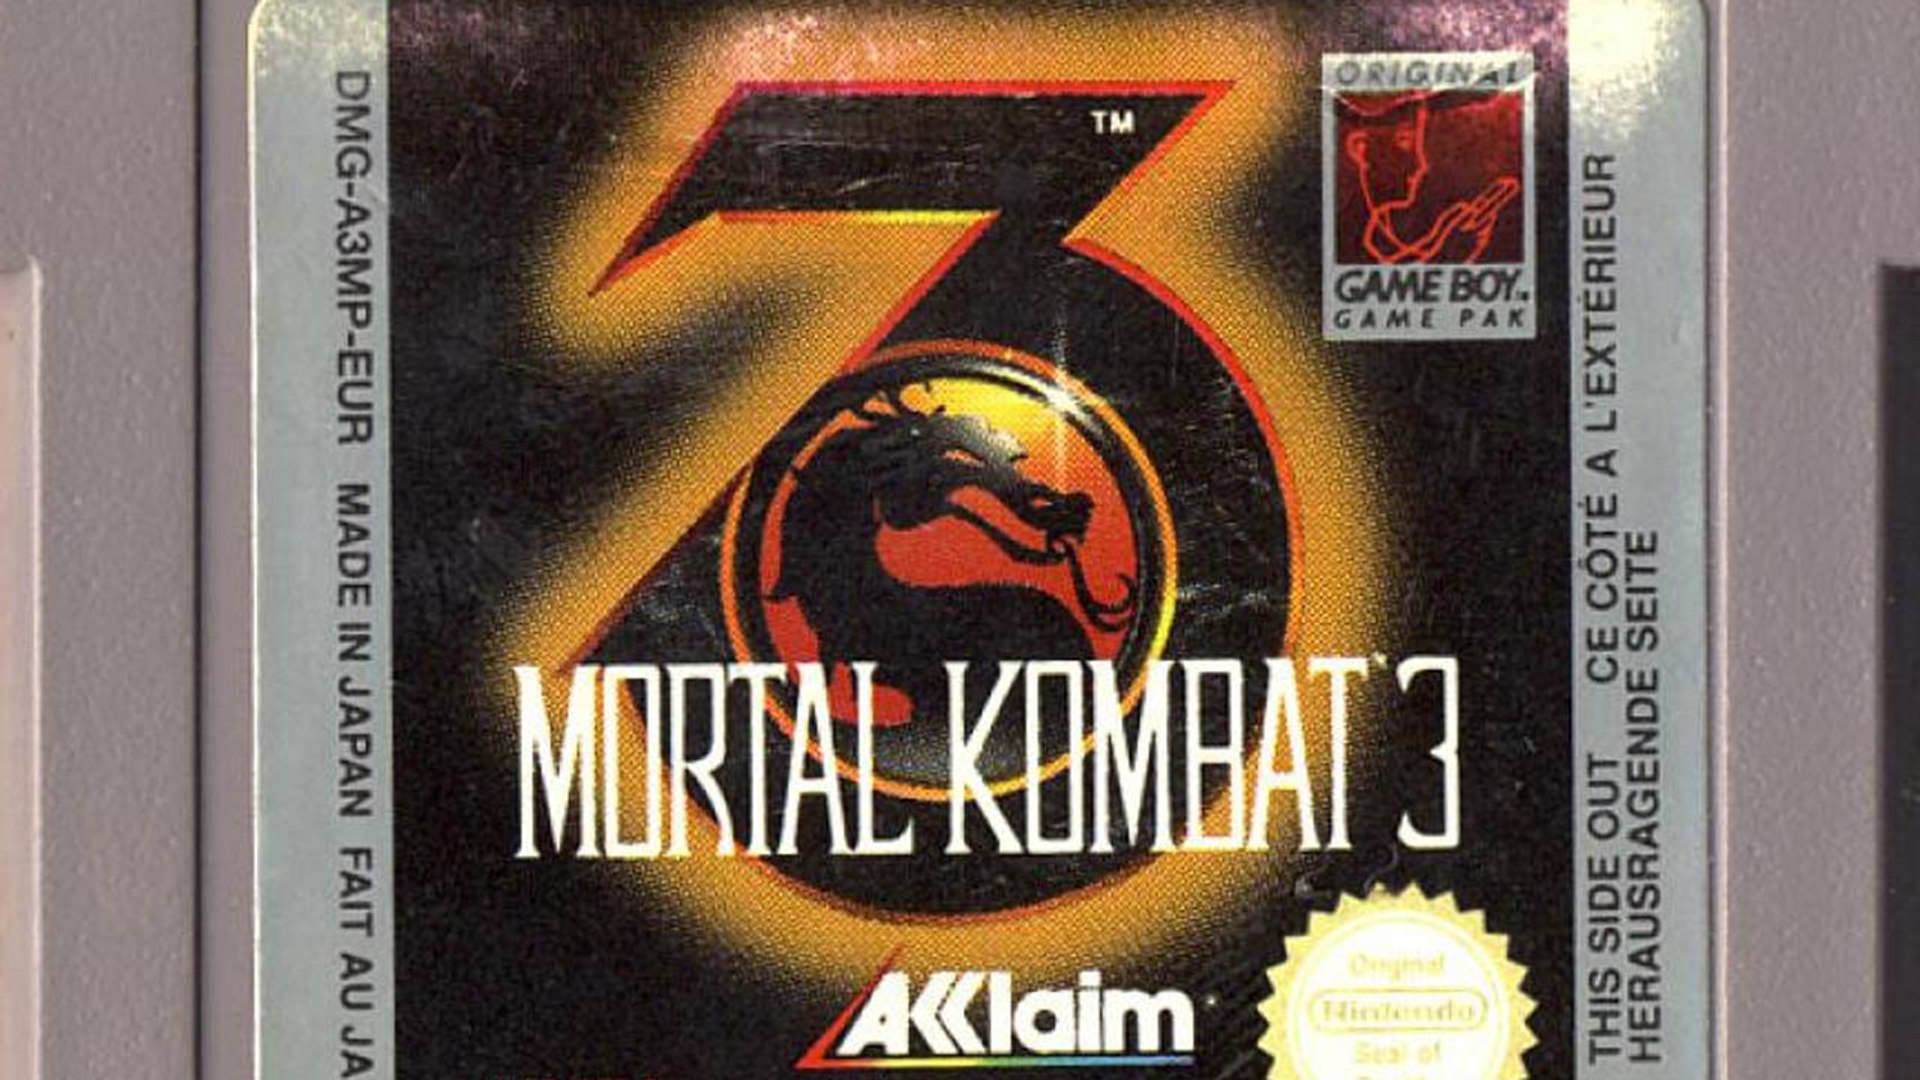 Mortal Kombat 3 (game boy) Game BoxBox My Games! Reproduction game boxes